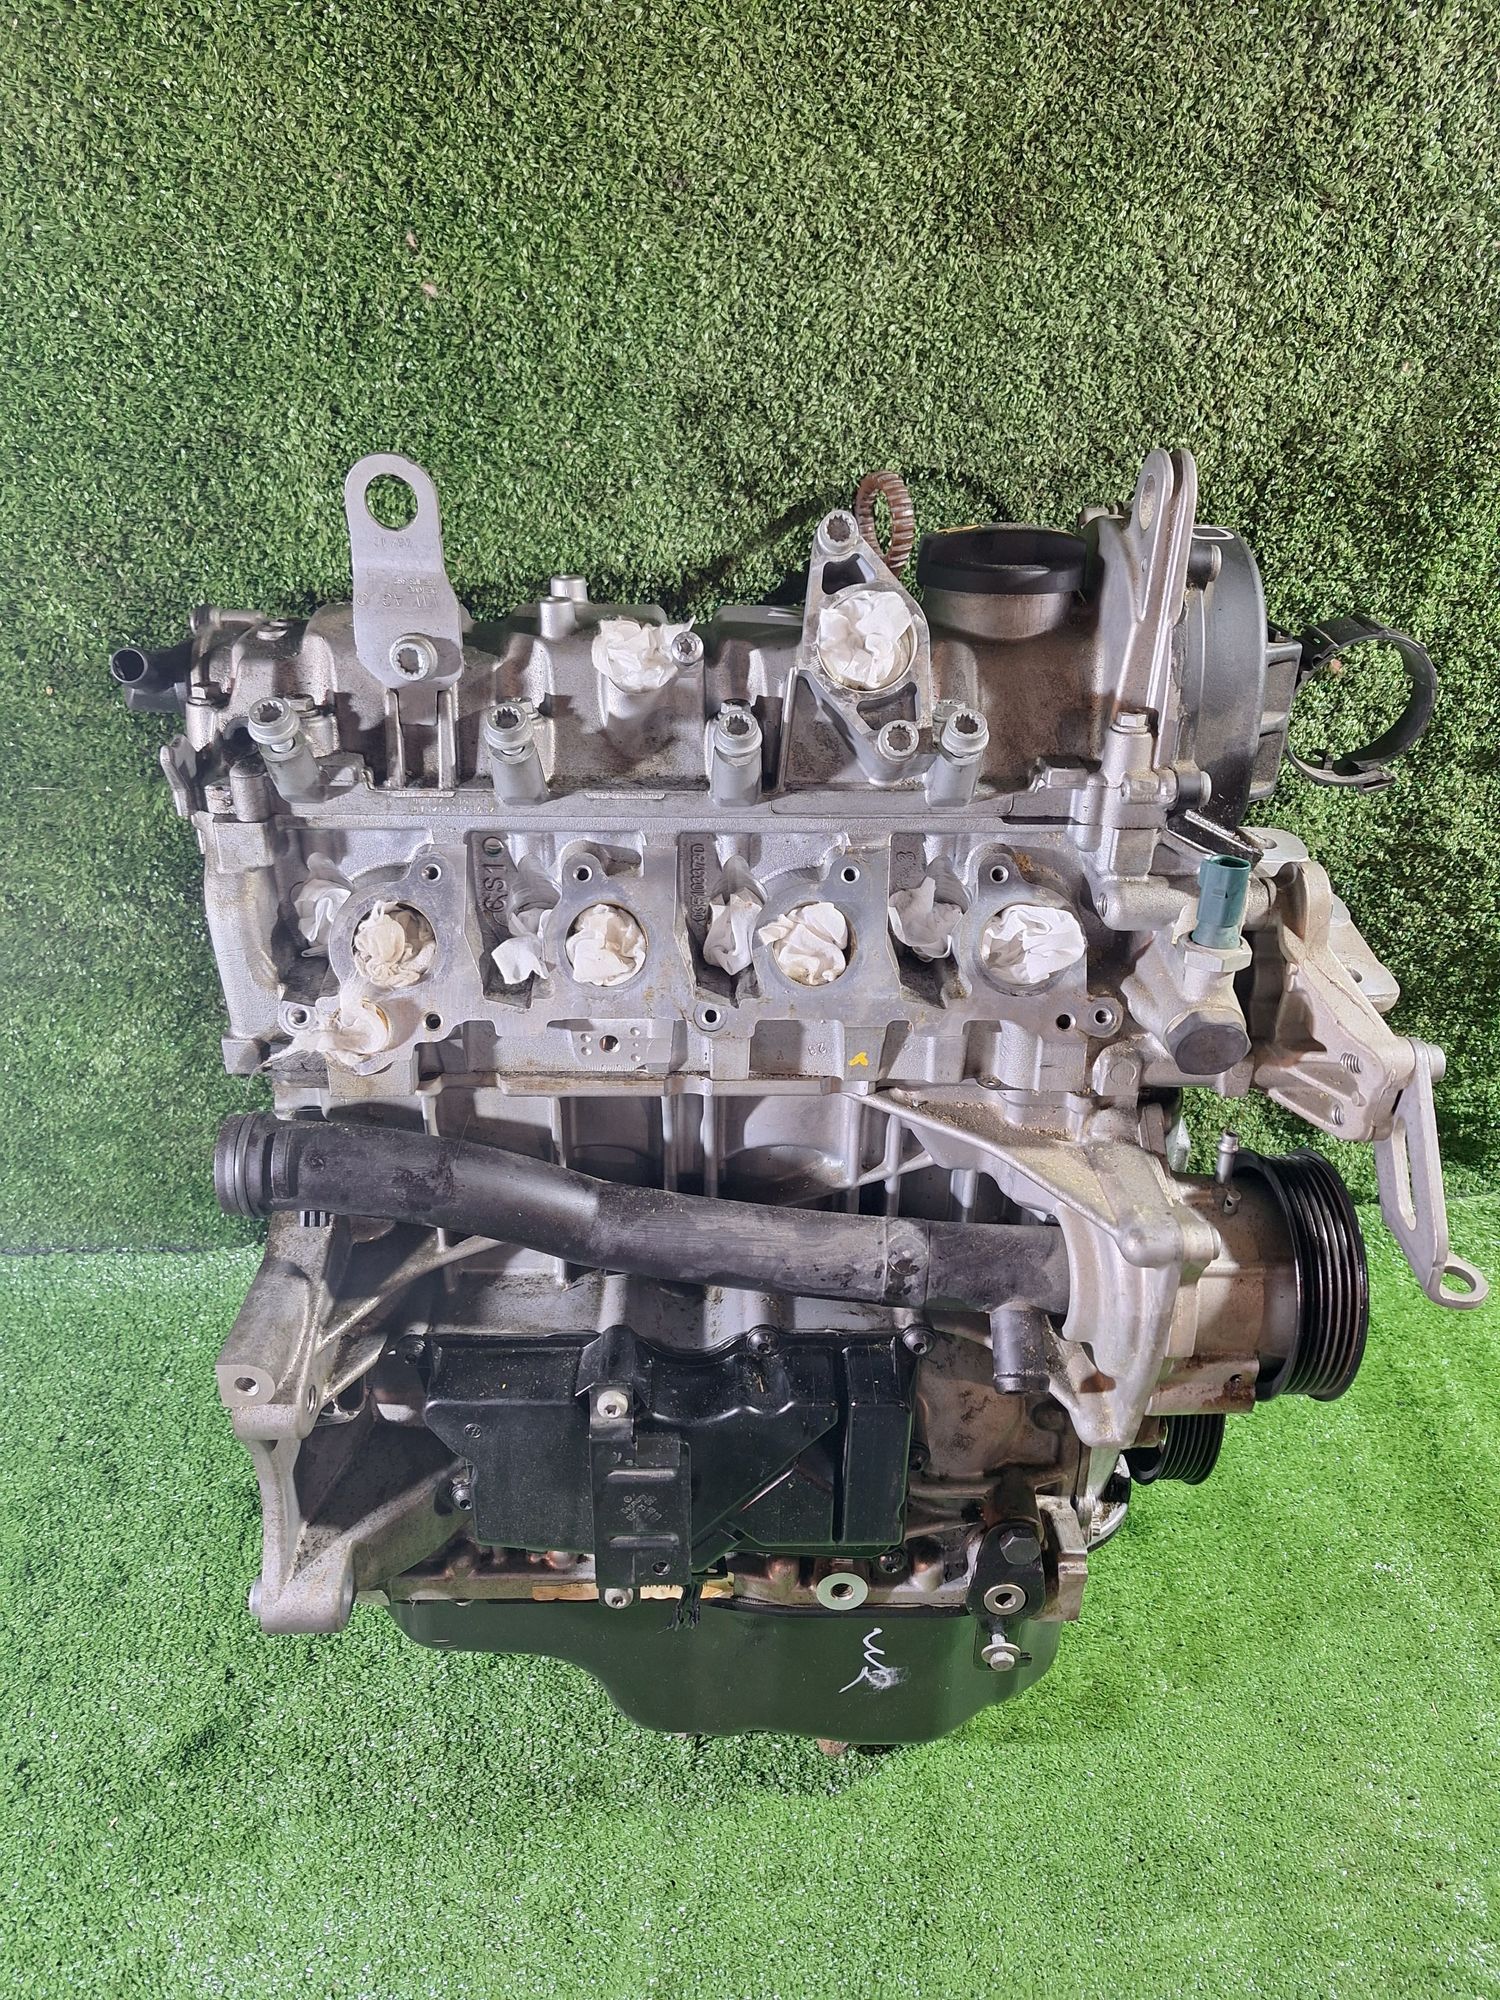 Двигатель в Skoda, Audi, Volkswagen, Seat
CBZ 1.2t